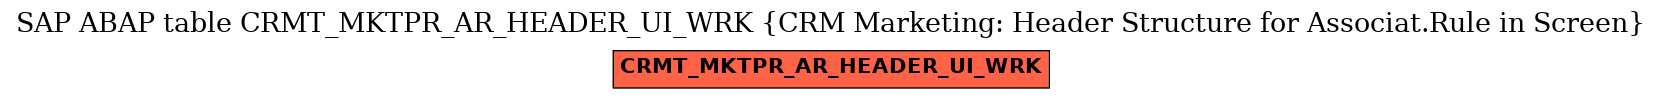 E-R Diagram for table CRMT_MKTPR_AR_HEADER_UI_WRK (CRM Marketing: Header Structure for Associat.Rule in Screen)